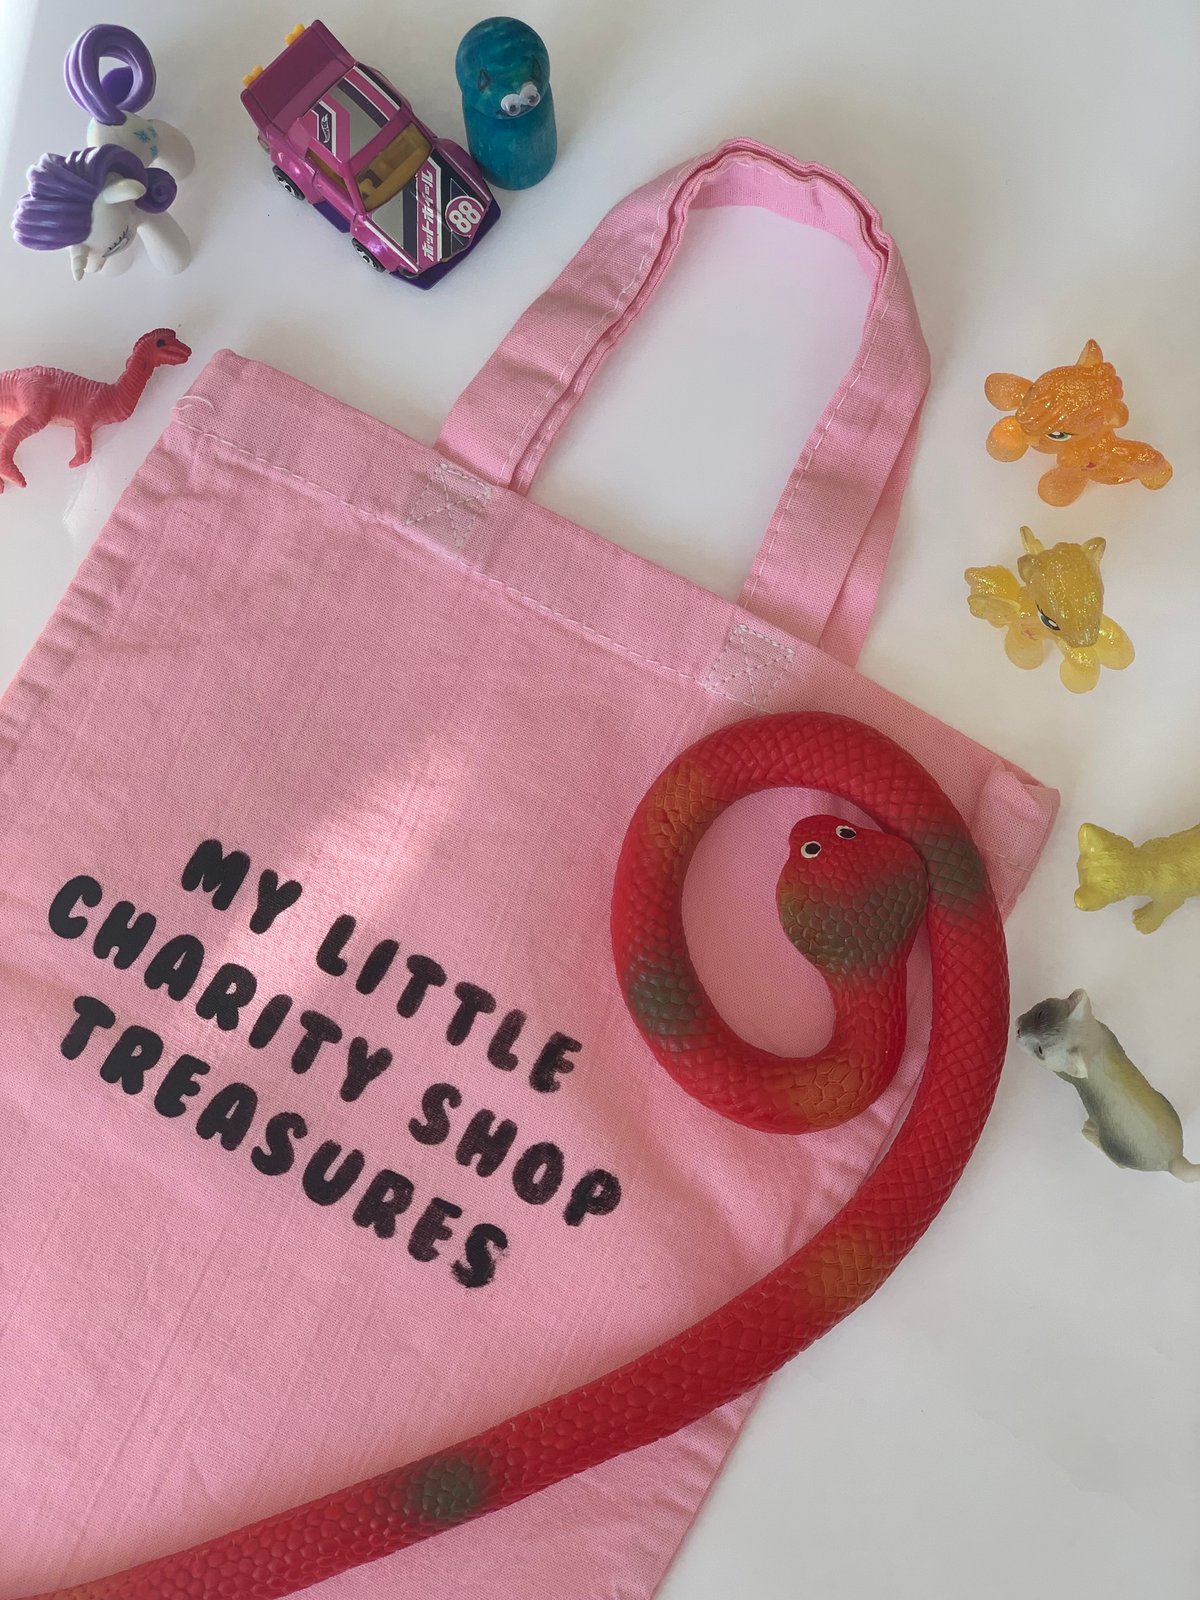 Image of Charity shop treasures Mini tote bag 